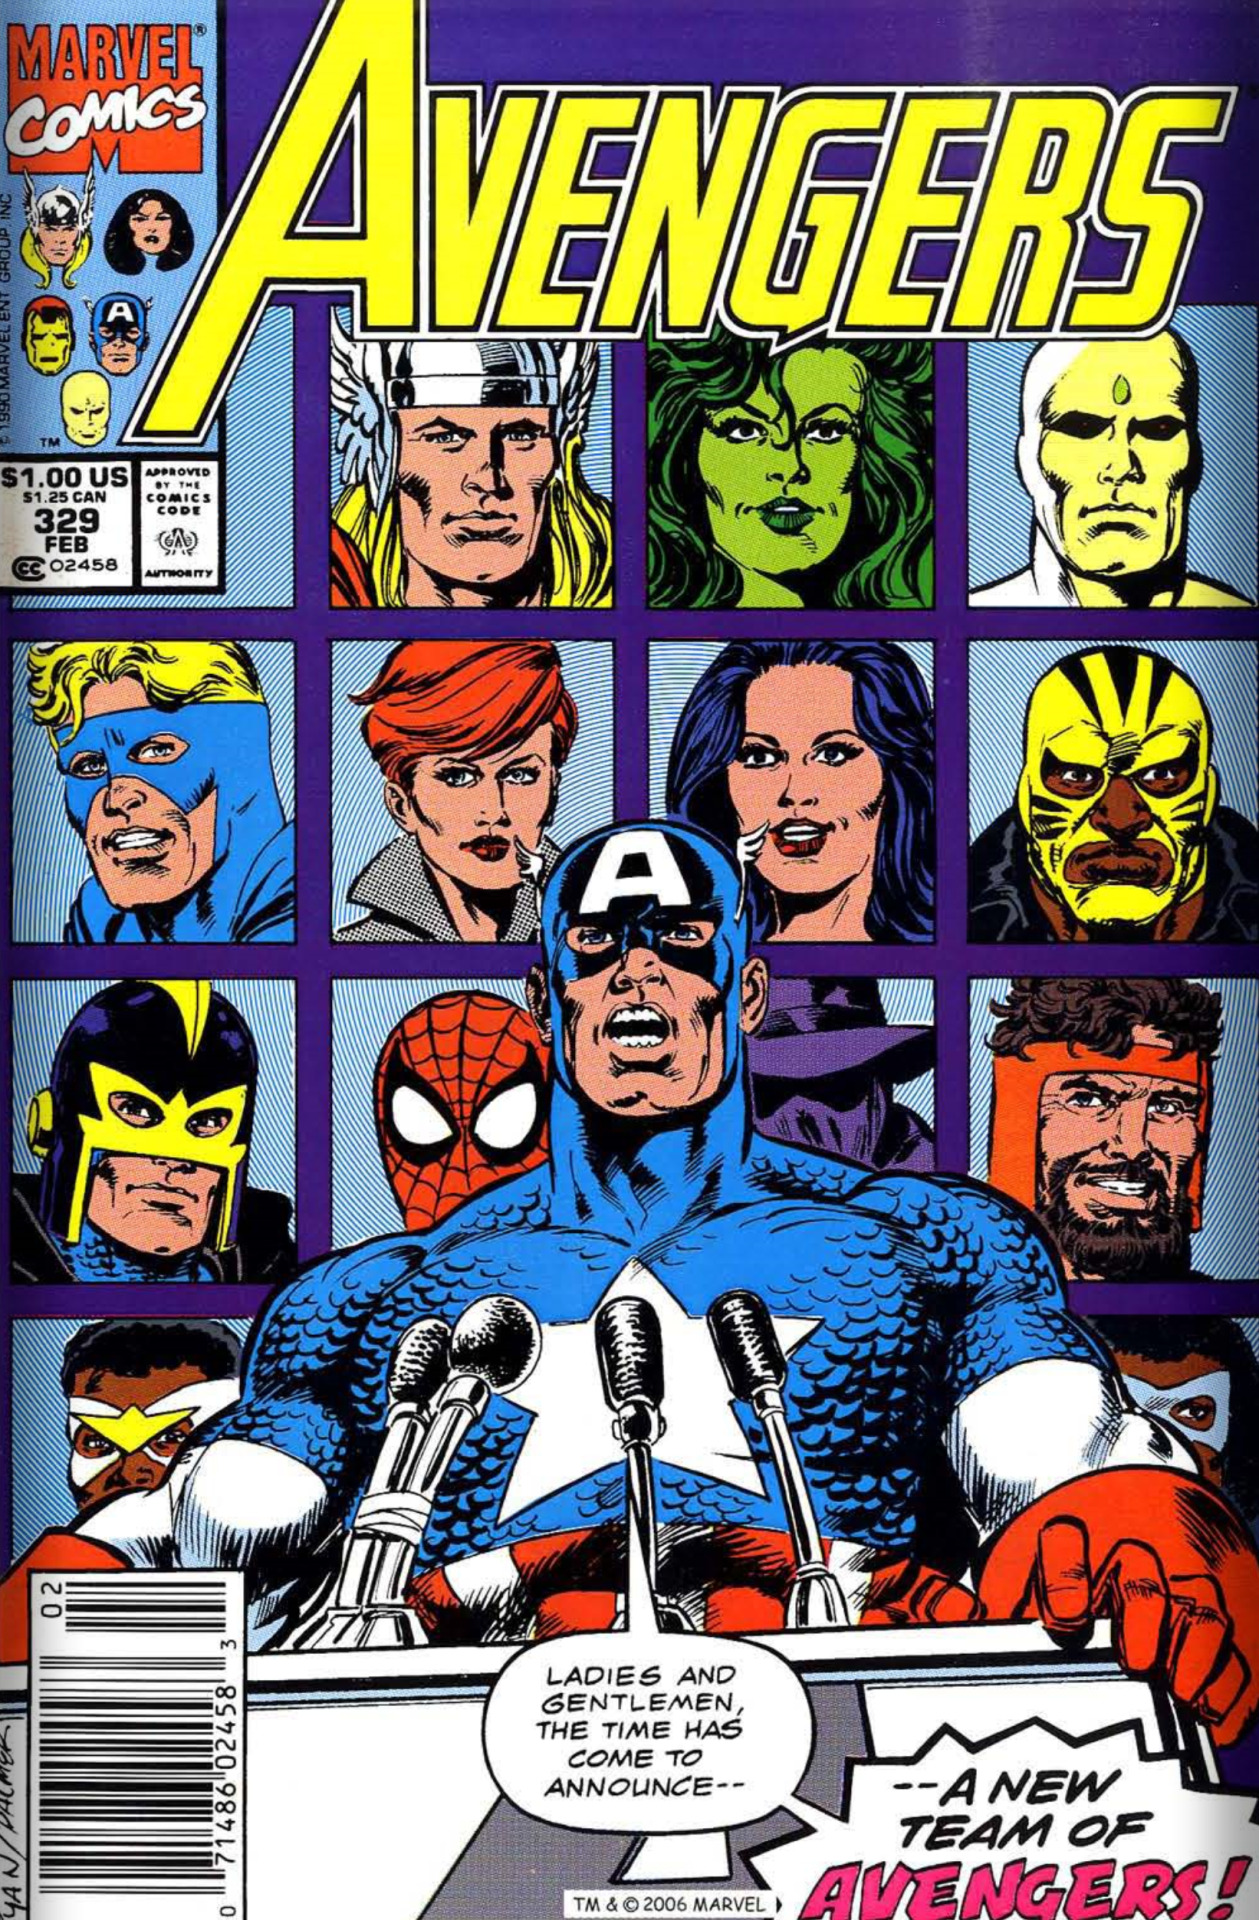 Time for another team shake up in the Avengers... #Marvel#Avengers #Steve Rogers ~ Captain America